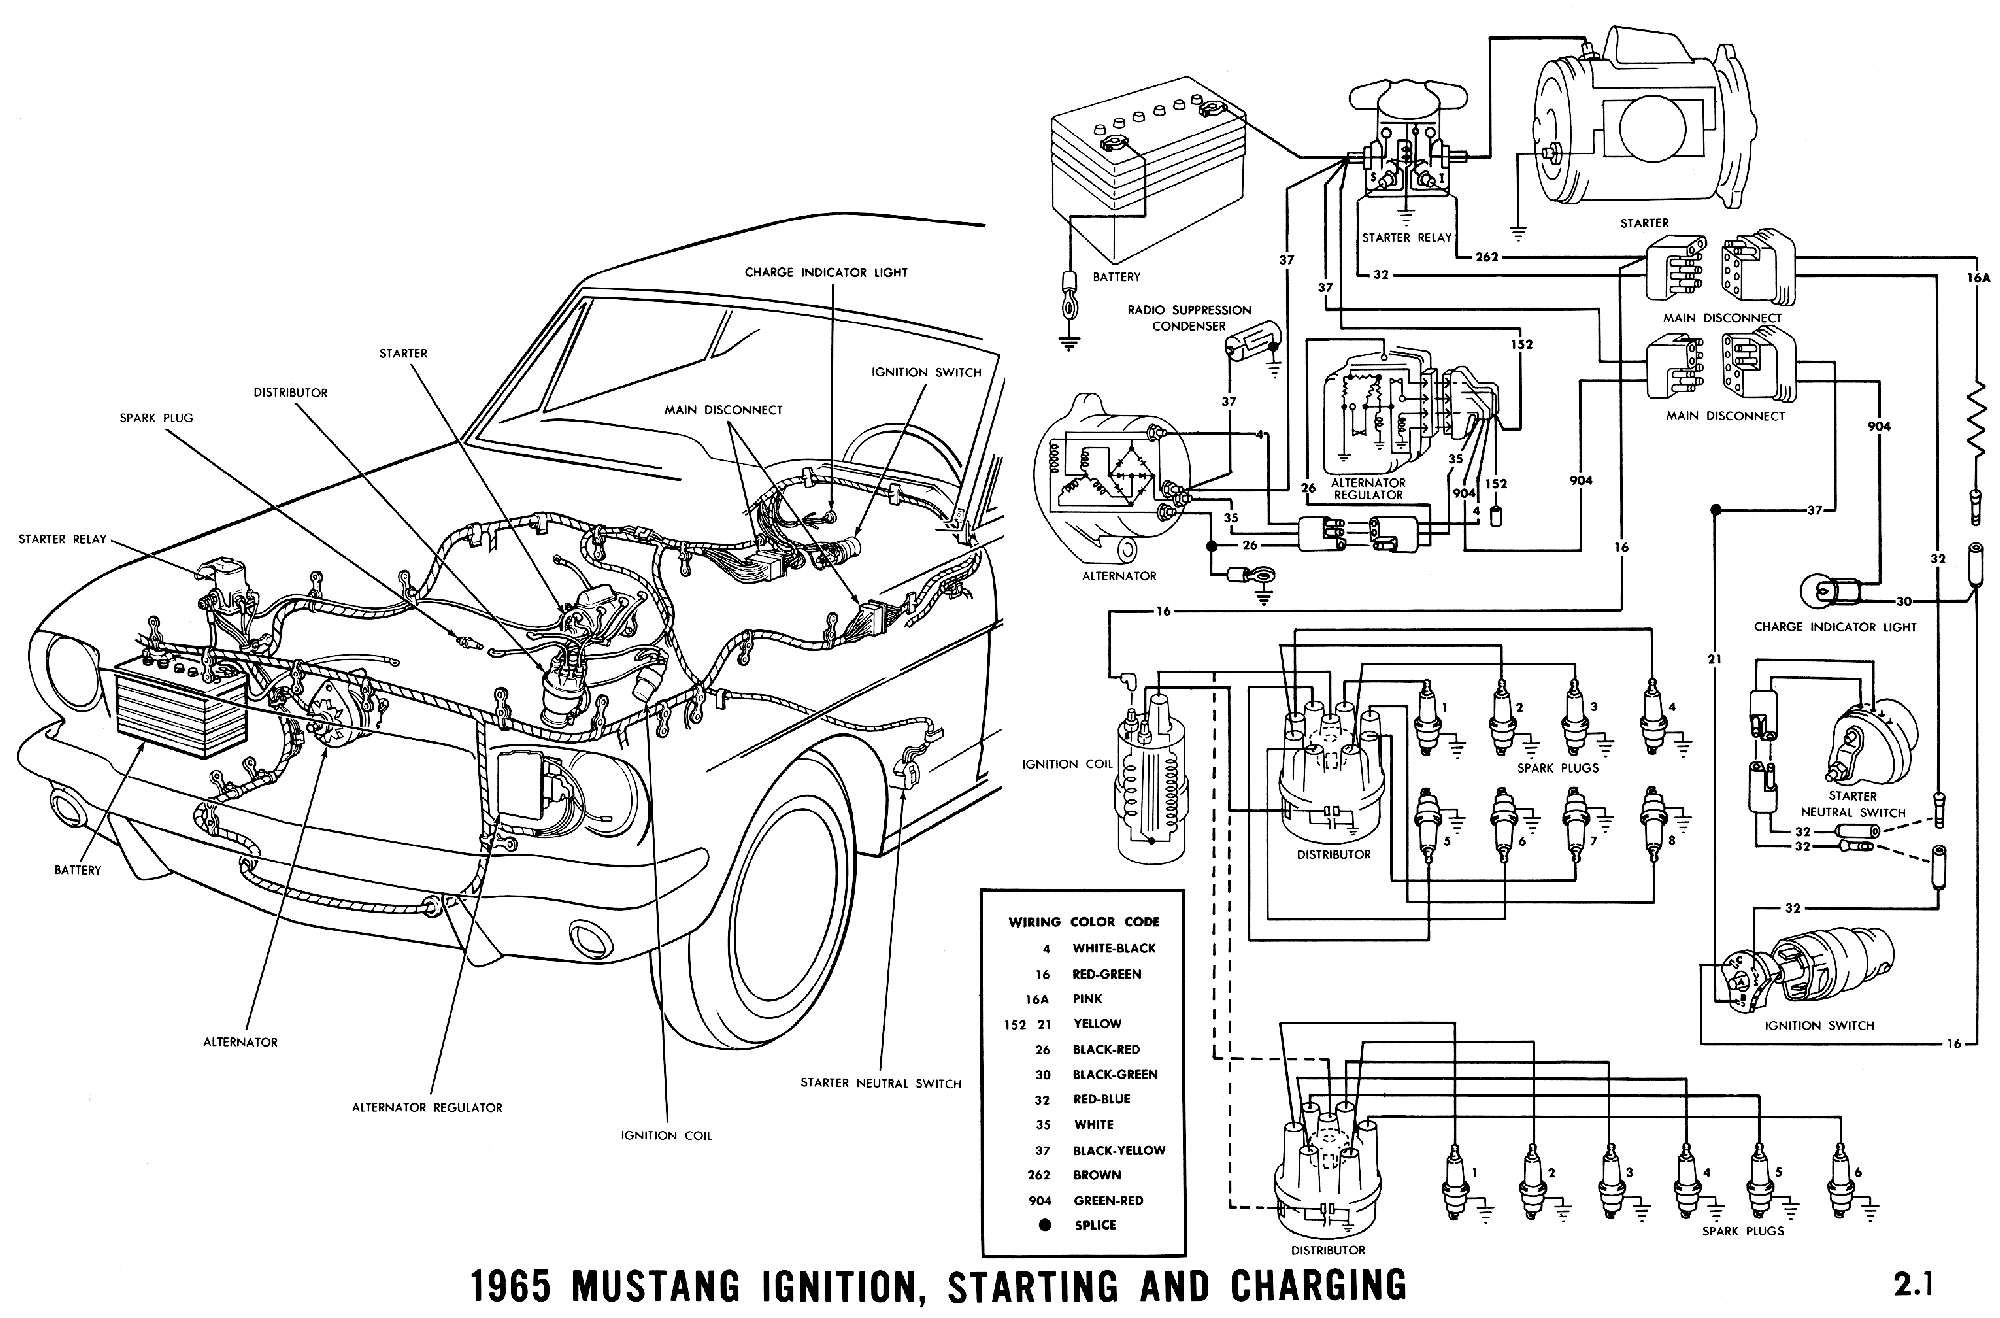 Car Parts by Diagram 2015 Mustang Engine Diagram Engine Car Parts and Ponent Diagram Of Car Parts by Diagram